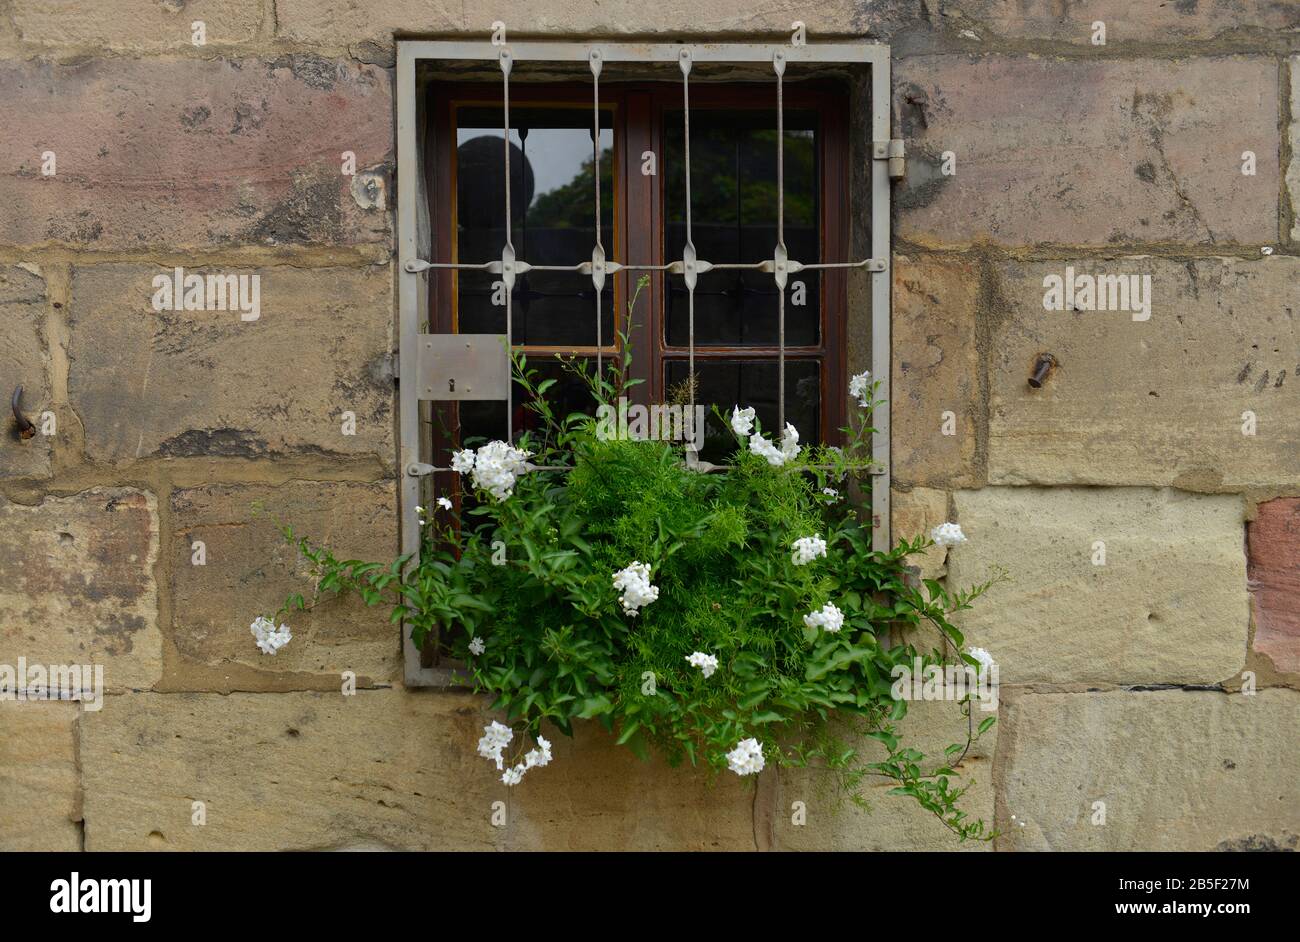 Fenster, Gitter, Altstadt, Kulmbach, Bayern, Deutschland Banque D'Images